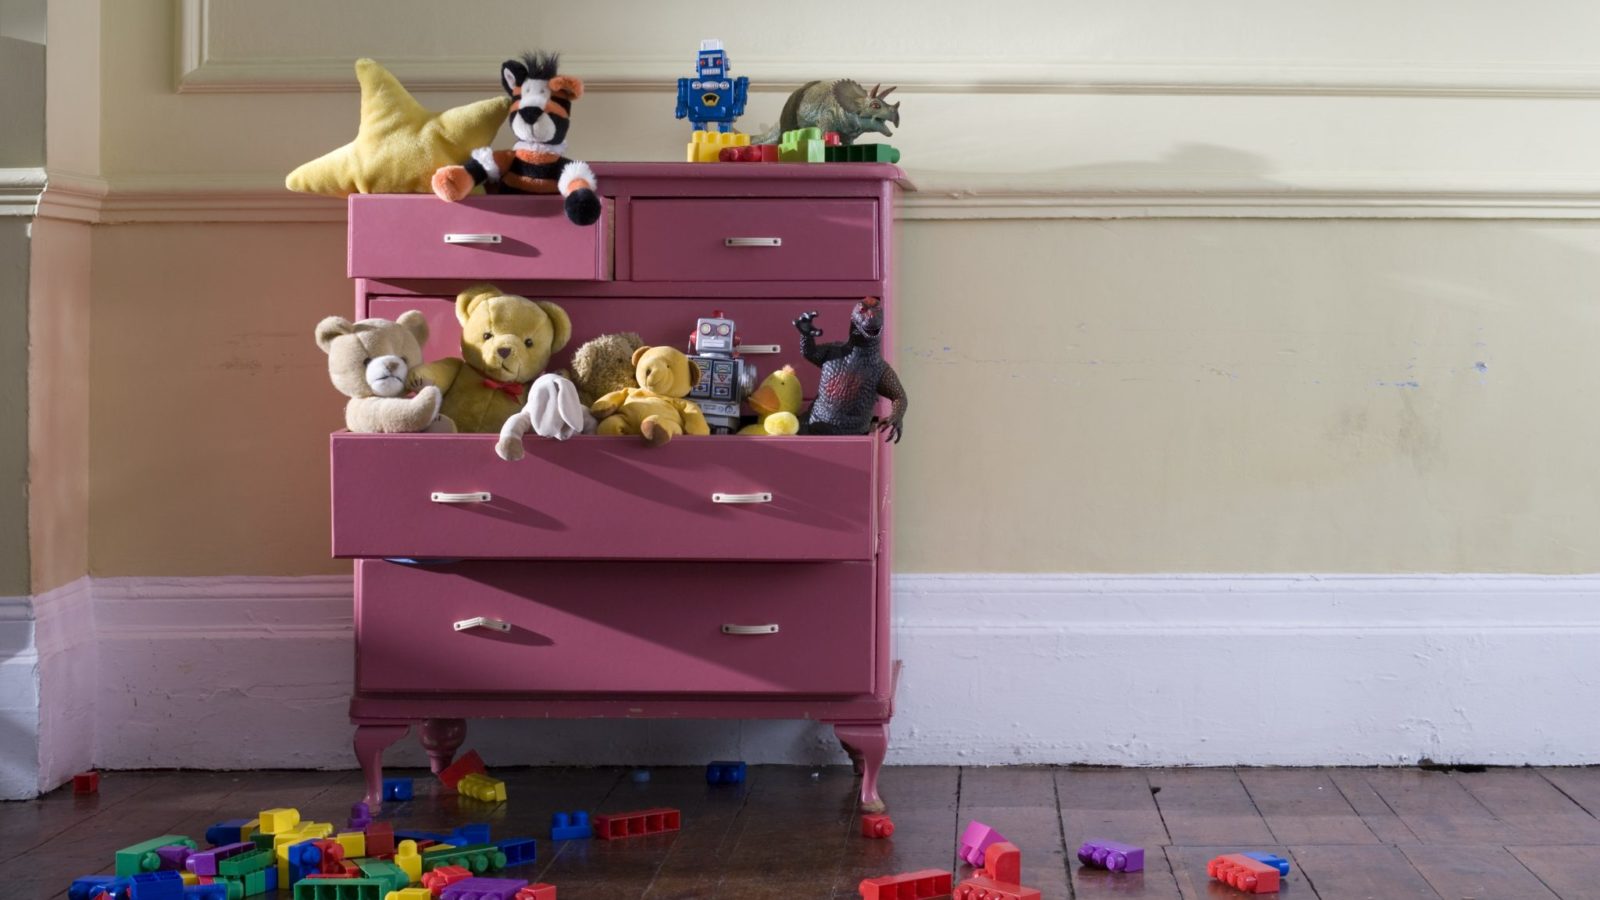 Toys overflow a dresser